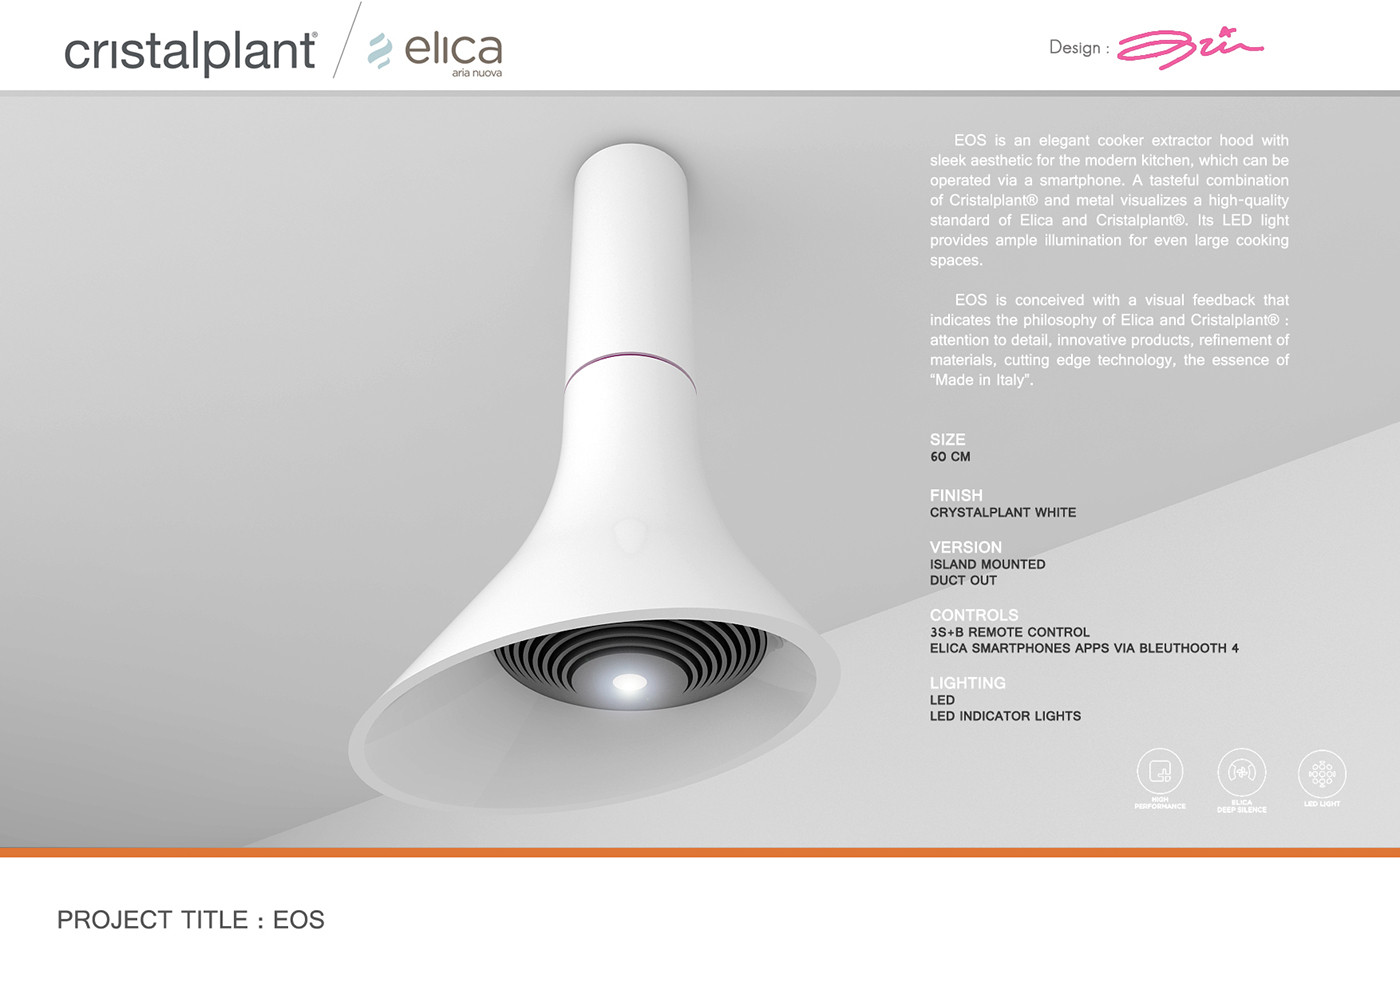 cristalplant design contest design contest elica kitchen home appliances